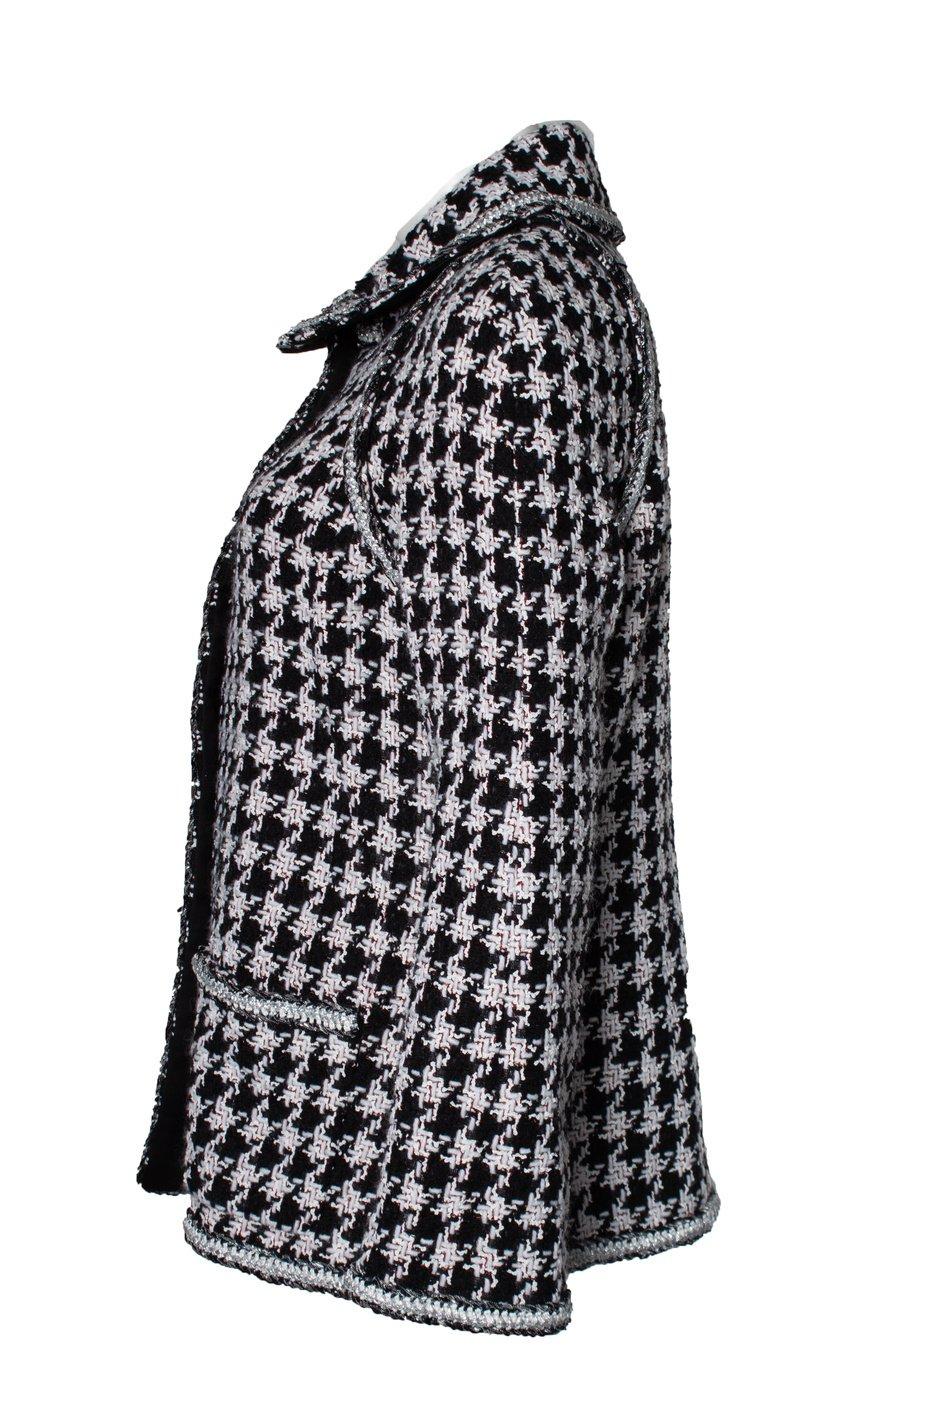 Chanel New Black Houndstooth Tweed Jacket For Sale 1